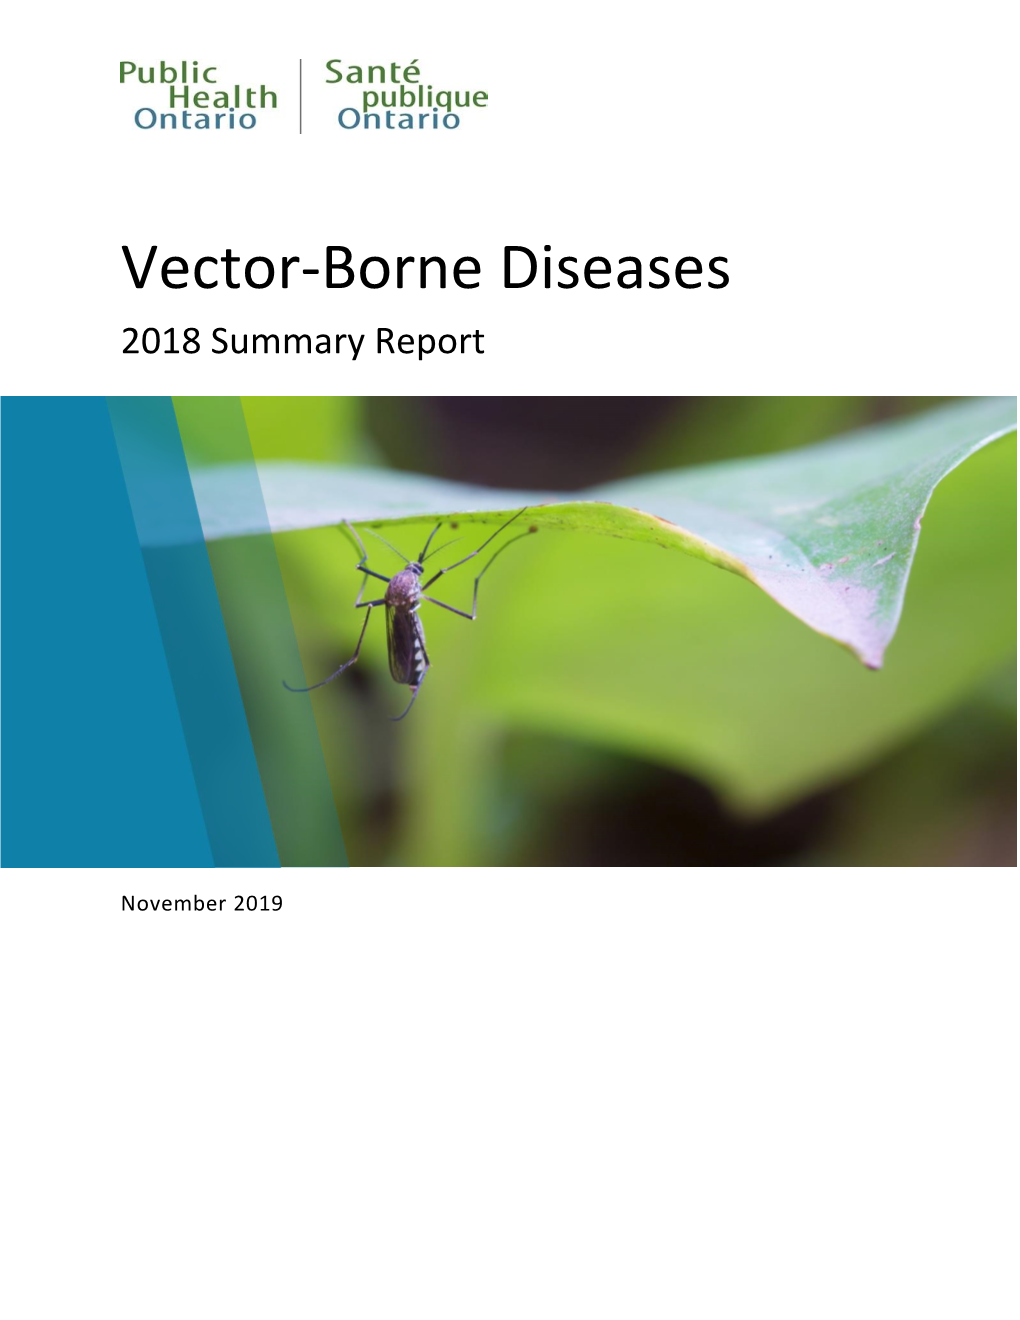 Vector-Borne Diseases Summary Report: 2018